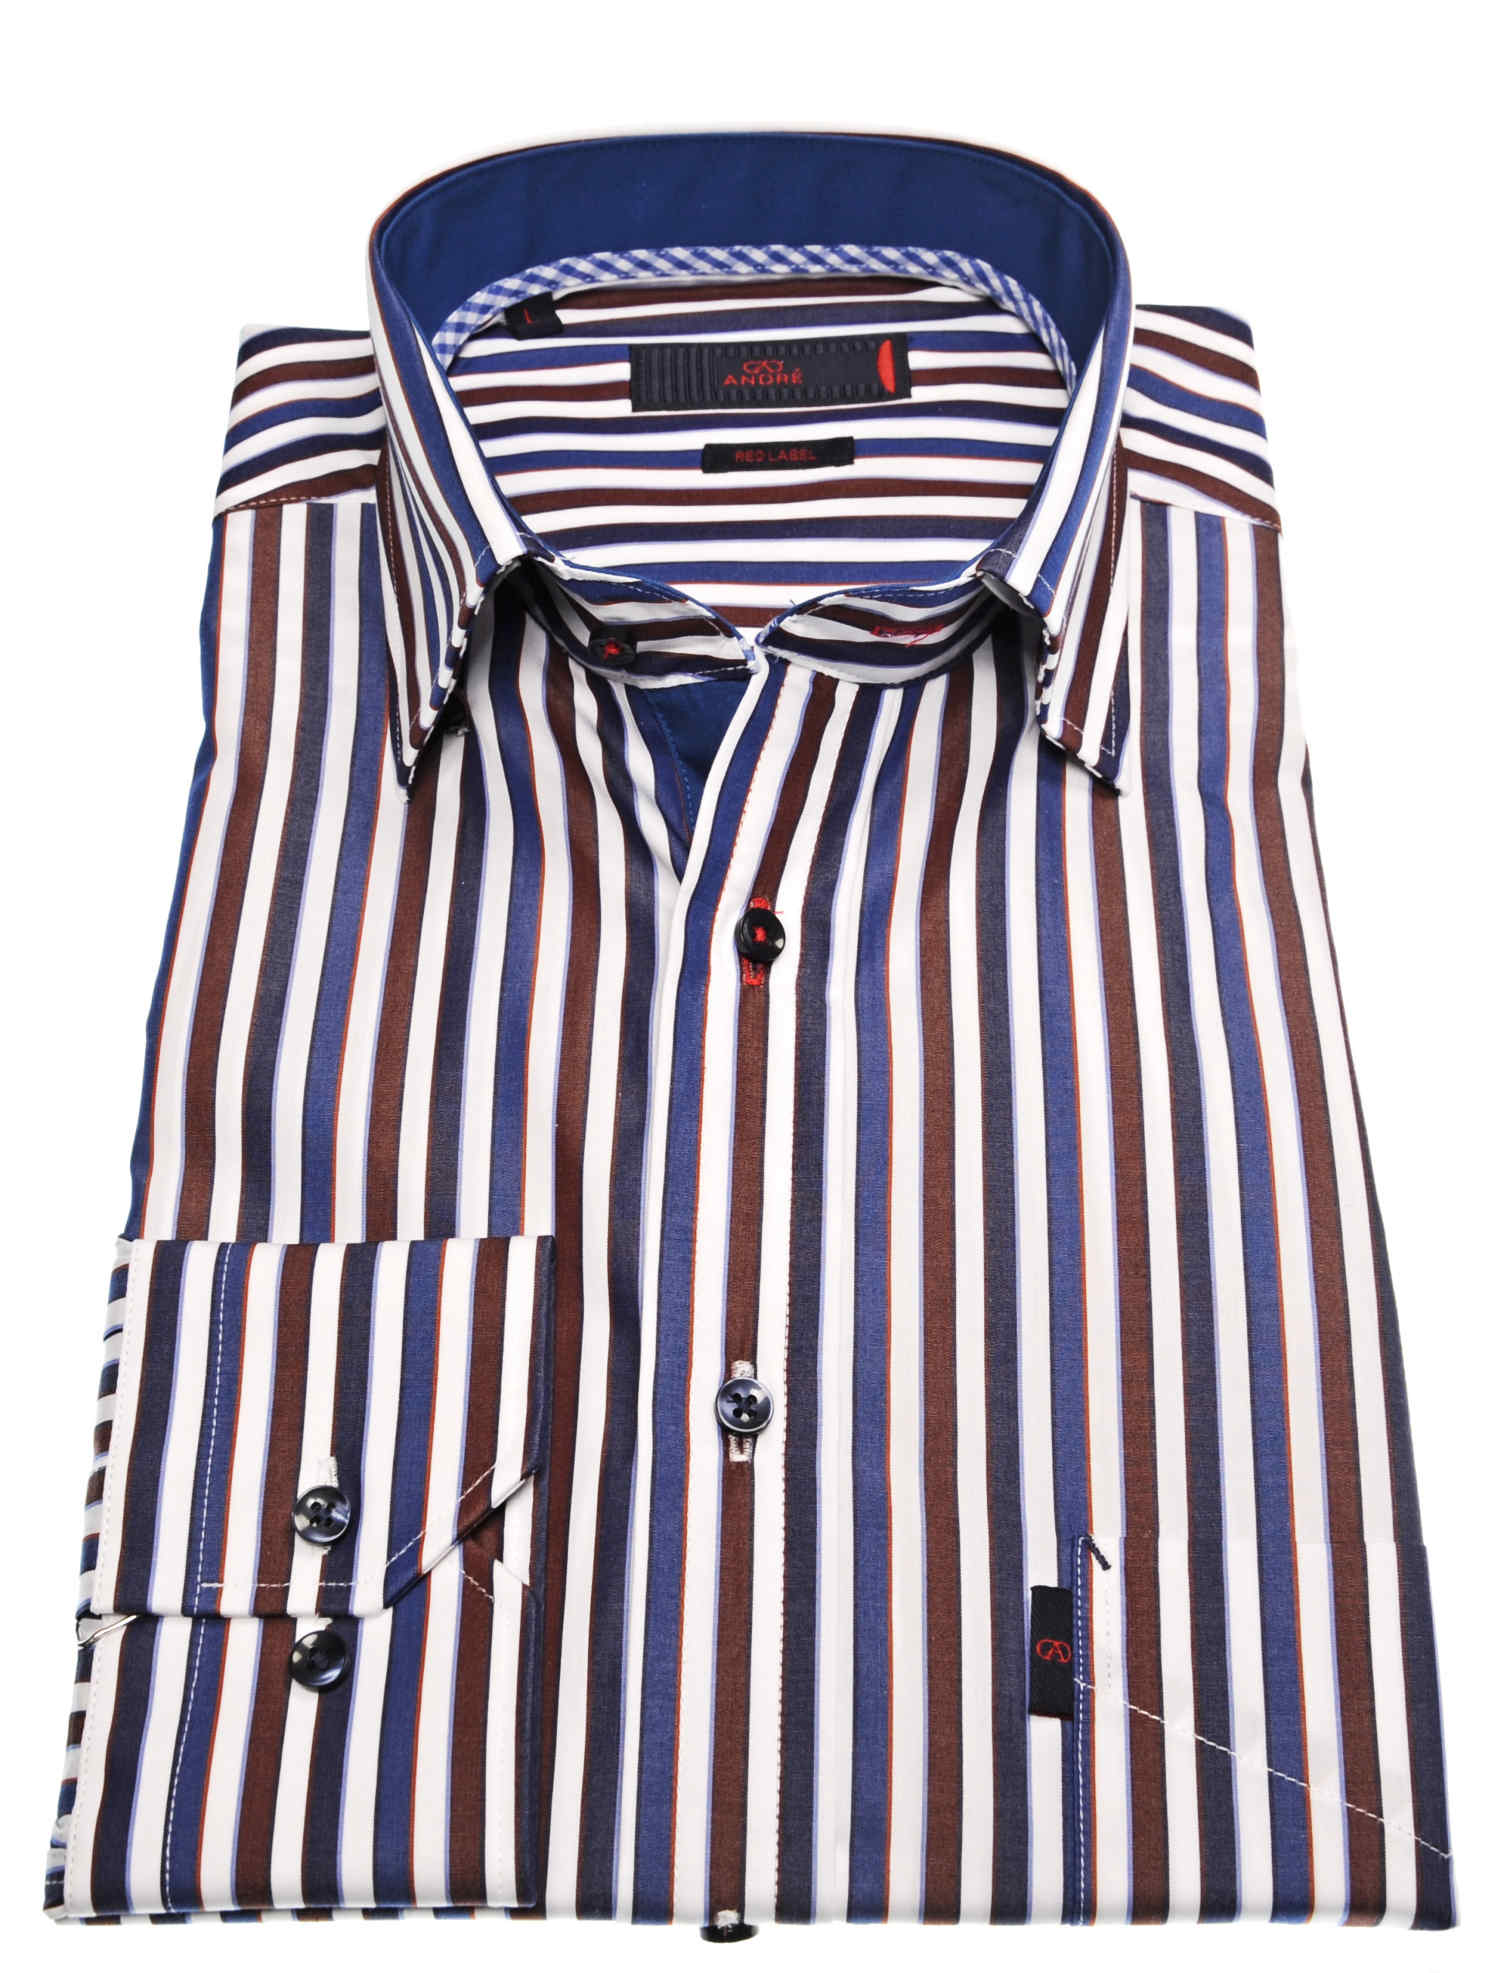 Blue/burgandy stripe - Tom Murphy's Formal and Menswear